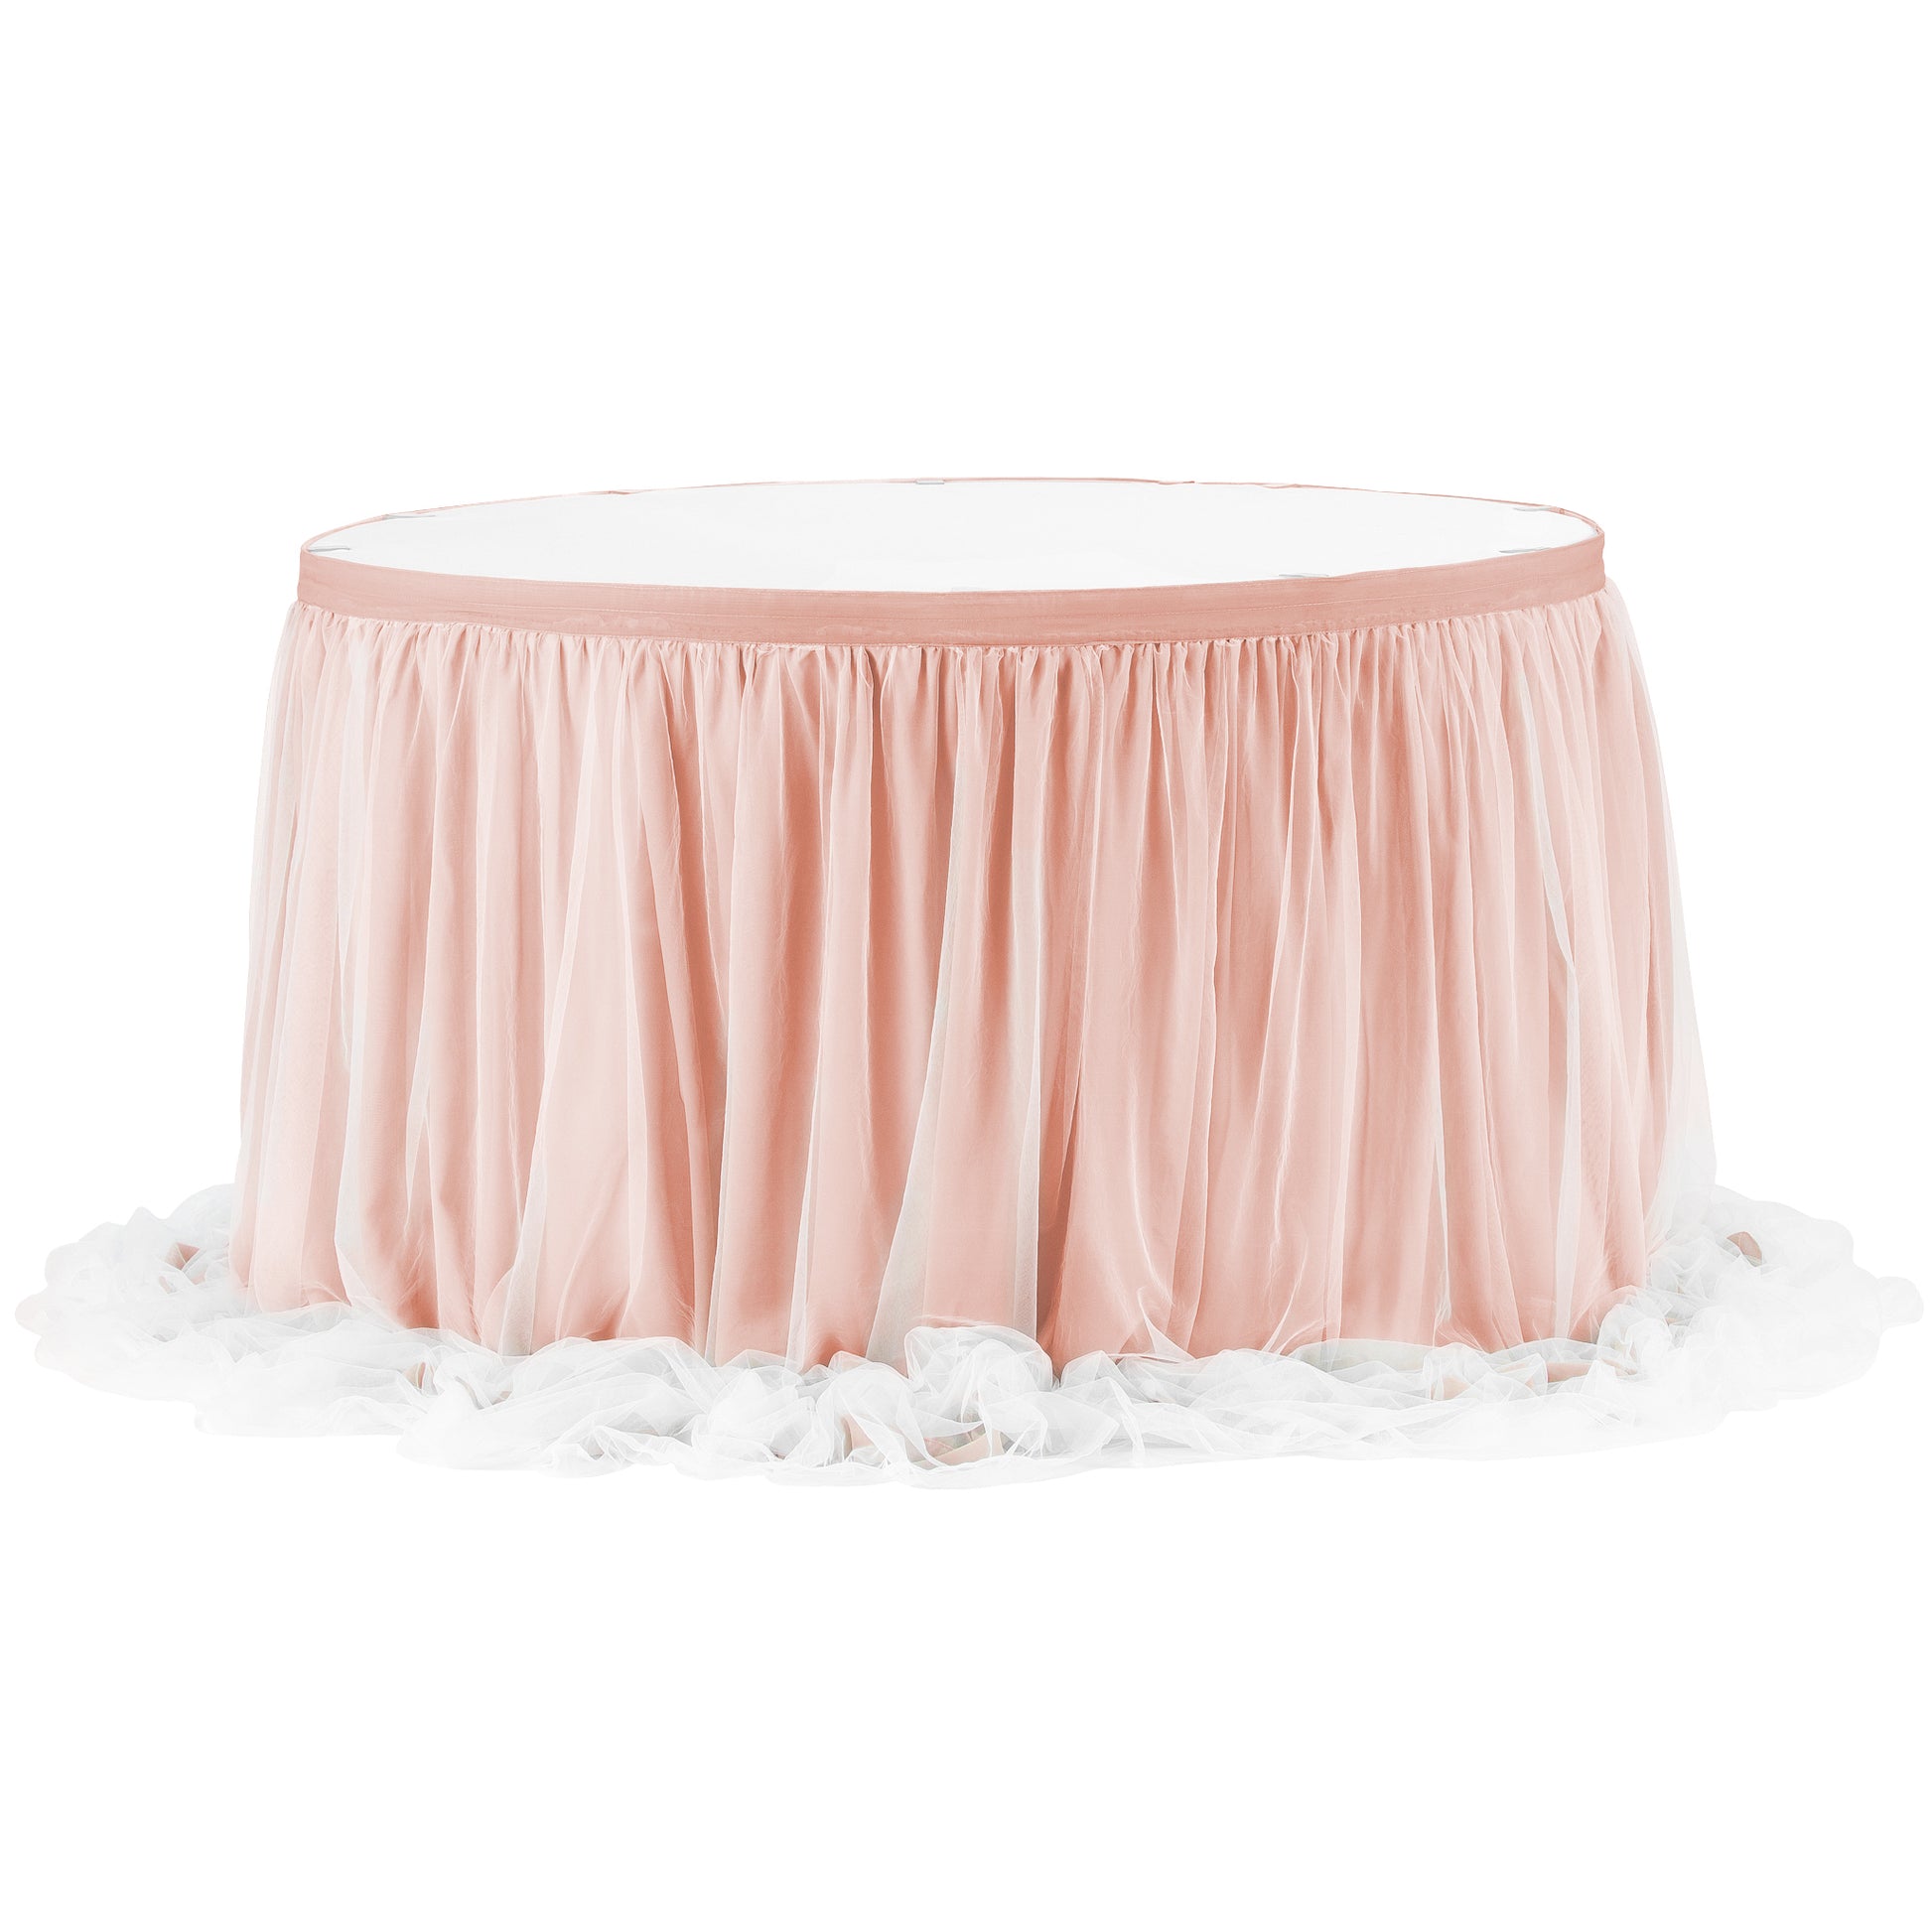 Chiffon Tulle Table Skirt Extra Long 17ft - Blush/Rose Gold - CV Linens